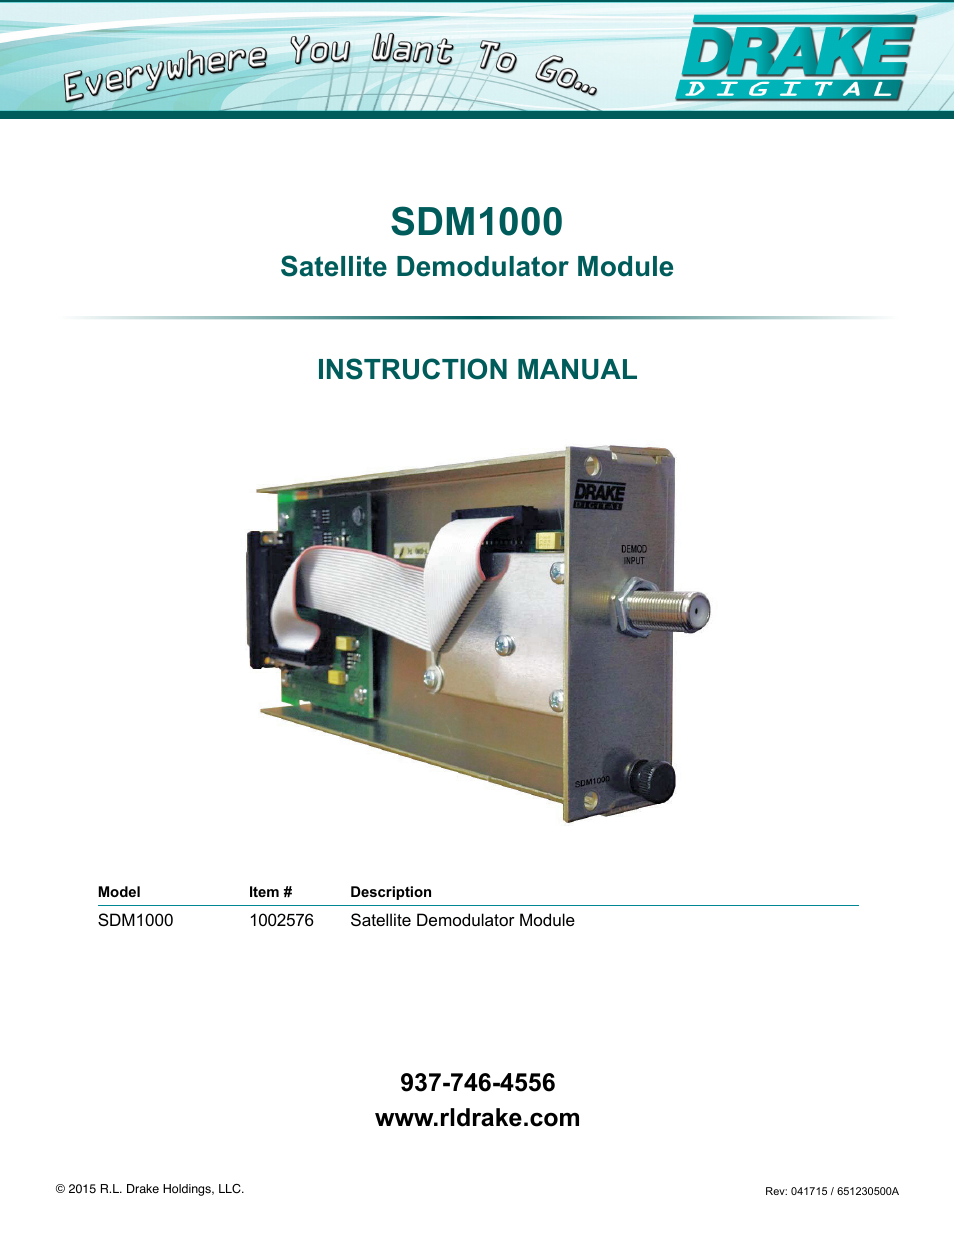 SDM1000 Satellite Demodulator Card